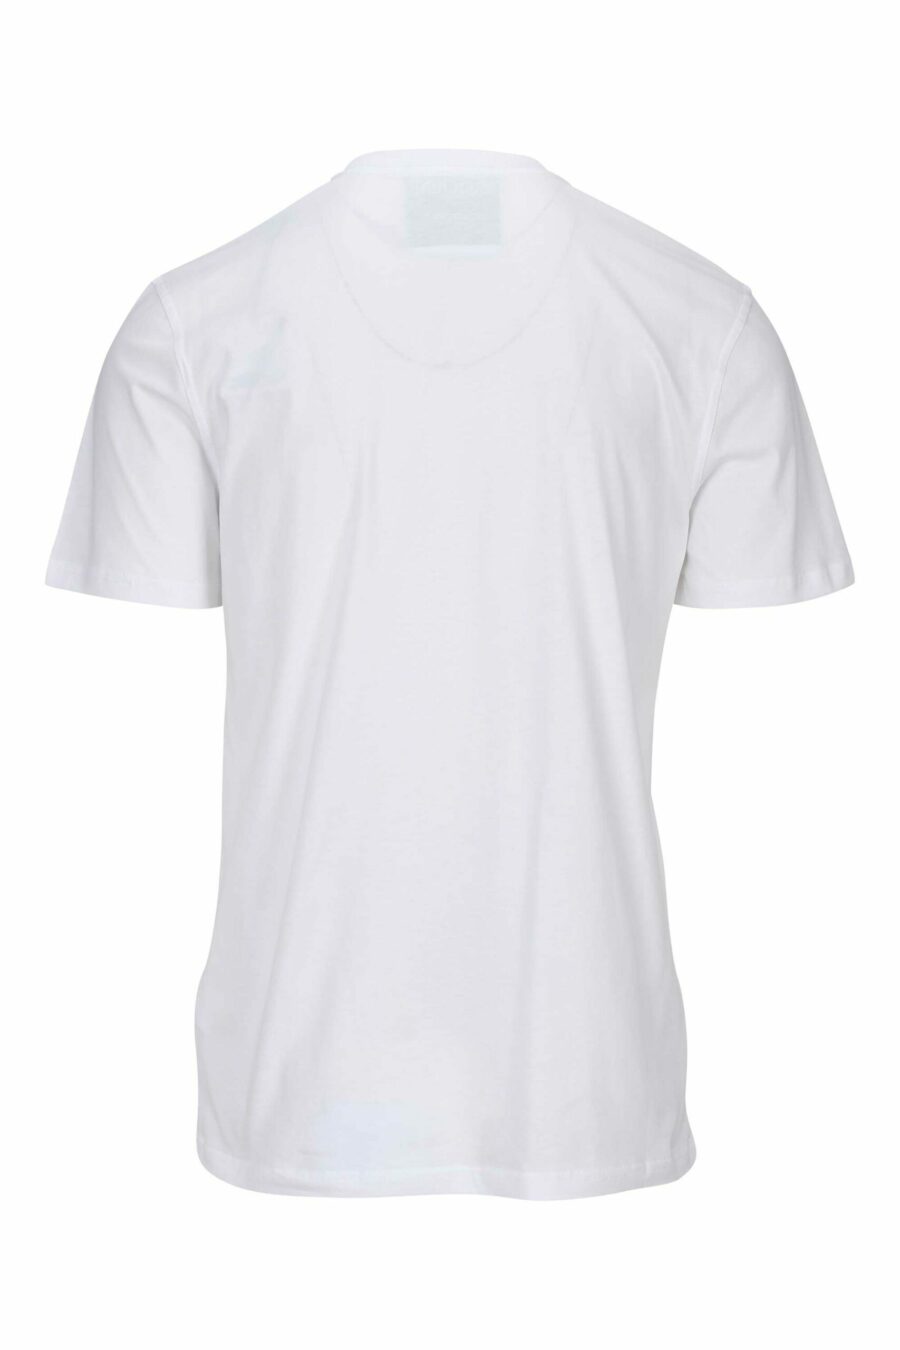 Camiseta blanca con minilogo "in love we trust" - 667113765501 1 scaled